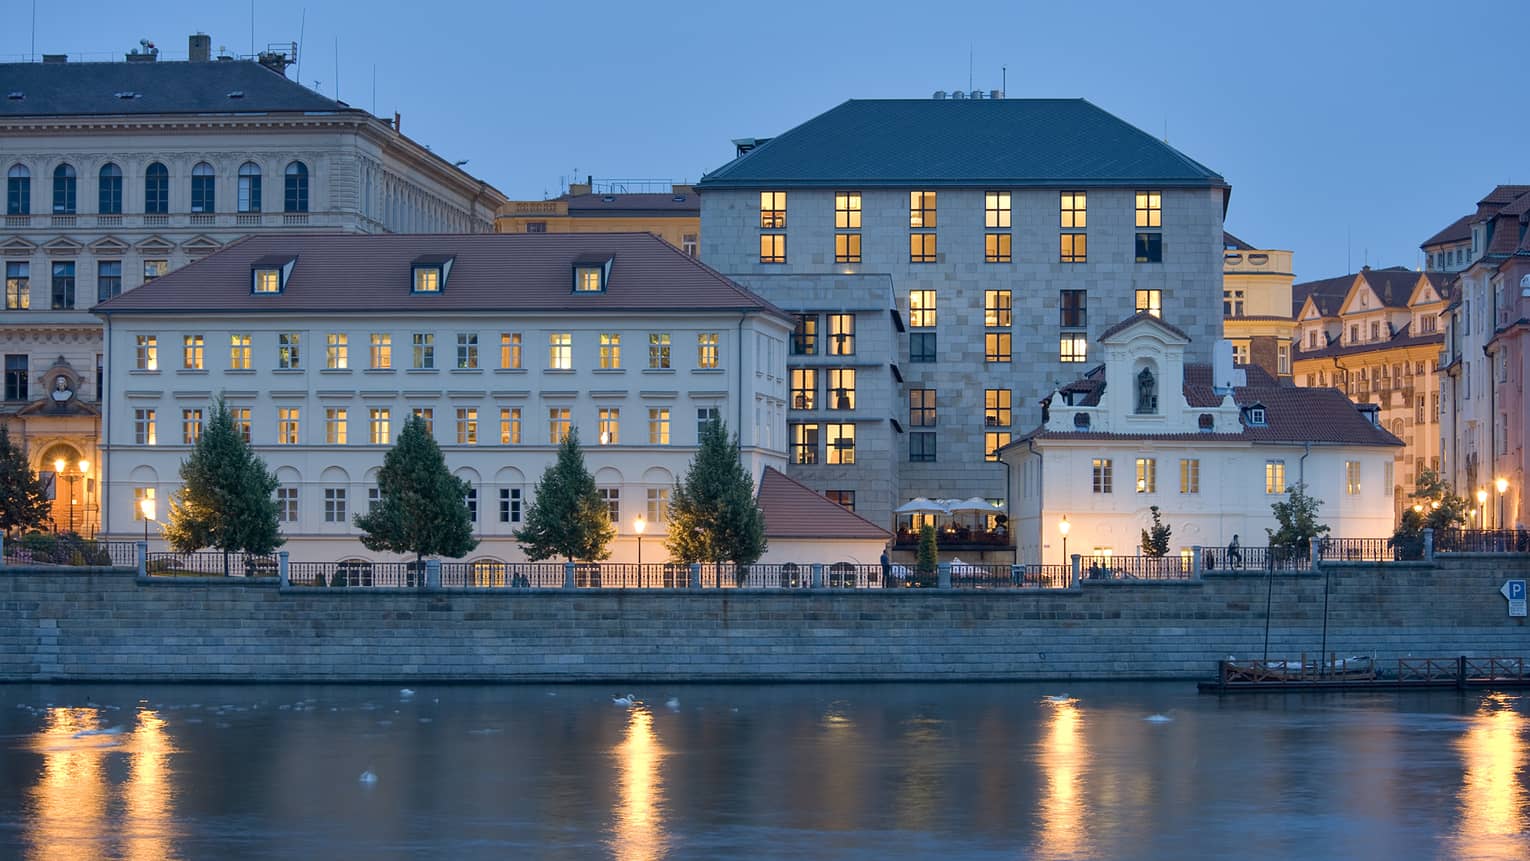 Four Seasons Hotel Prague exterior at night with lit windows, reflecting on Vltava River